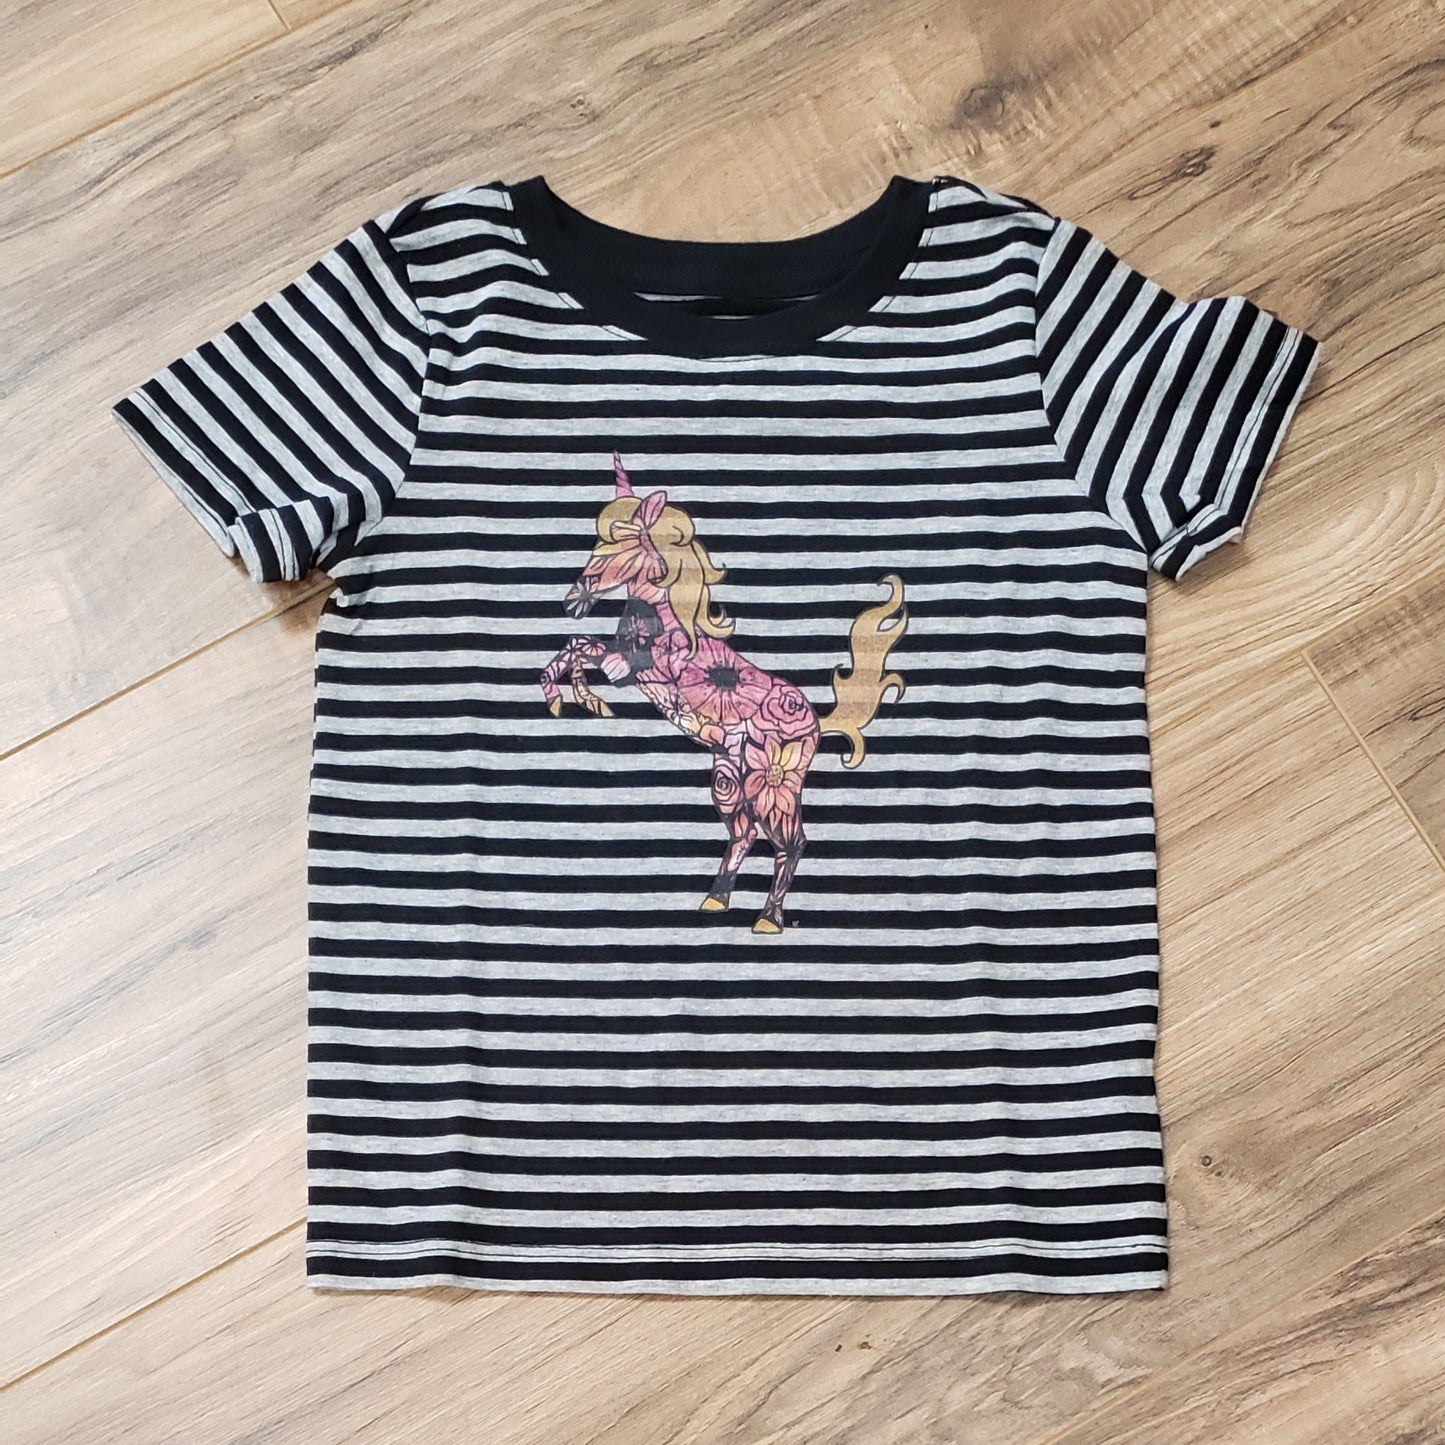 Tatted Unicorn Toddler T-Shirt